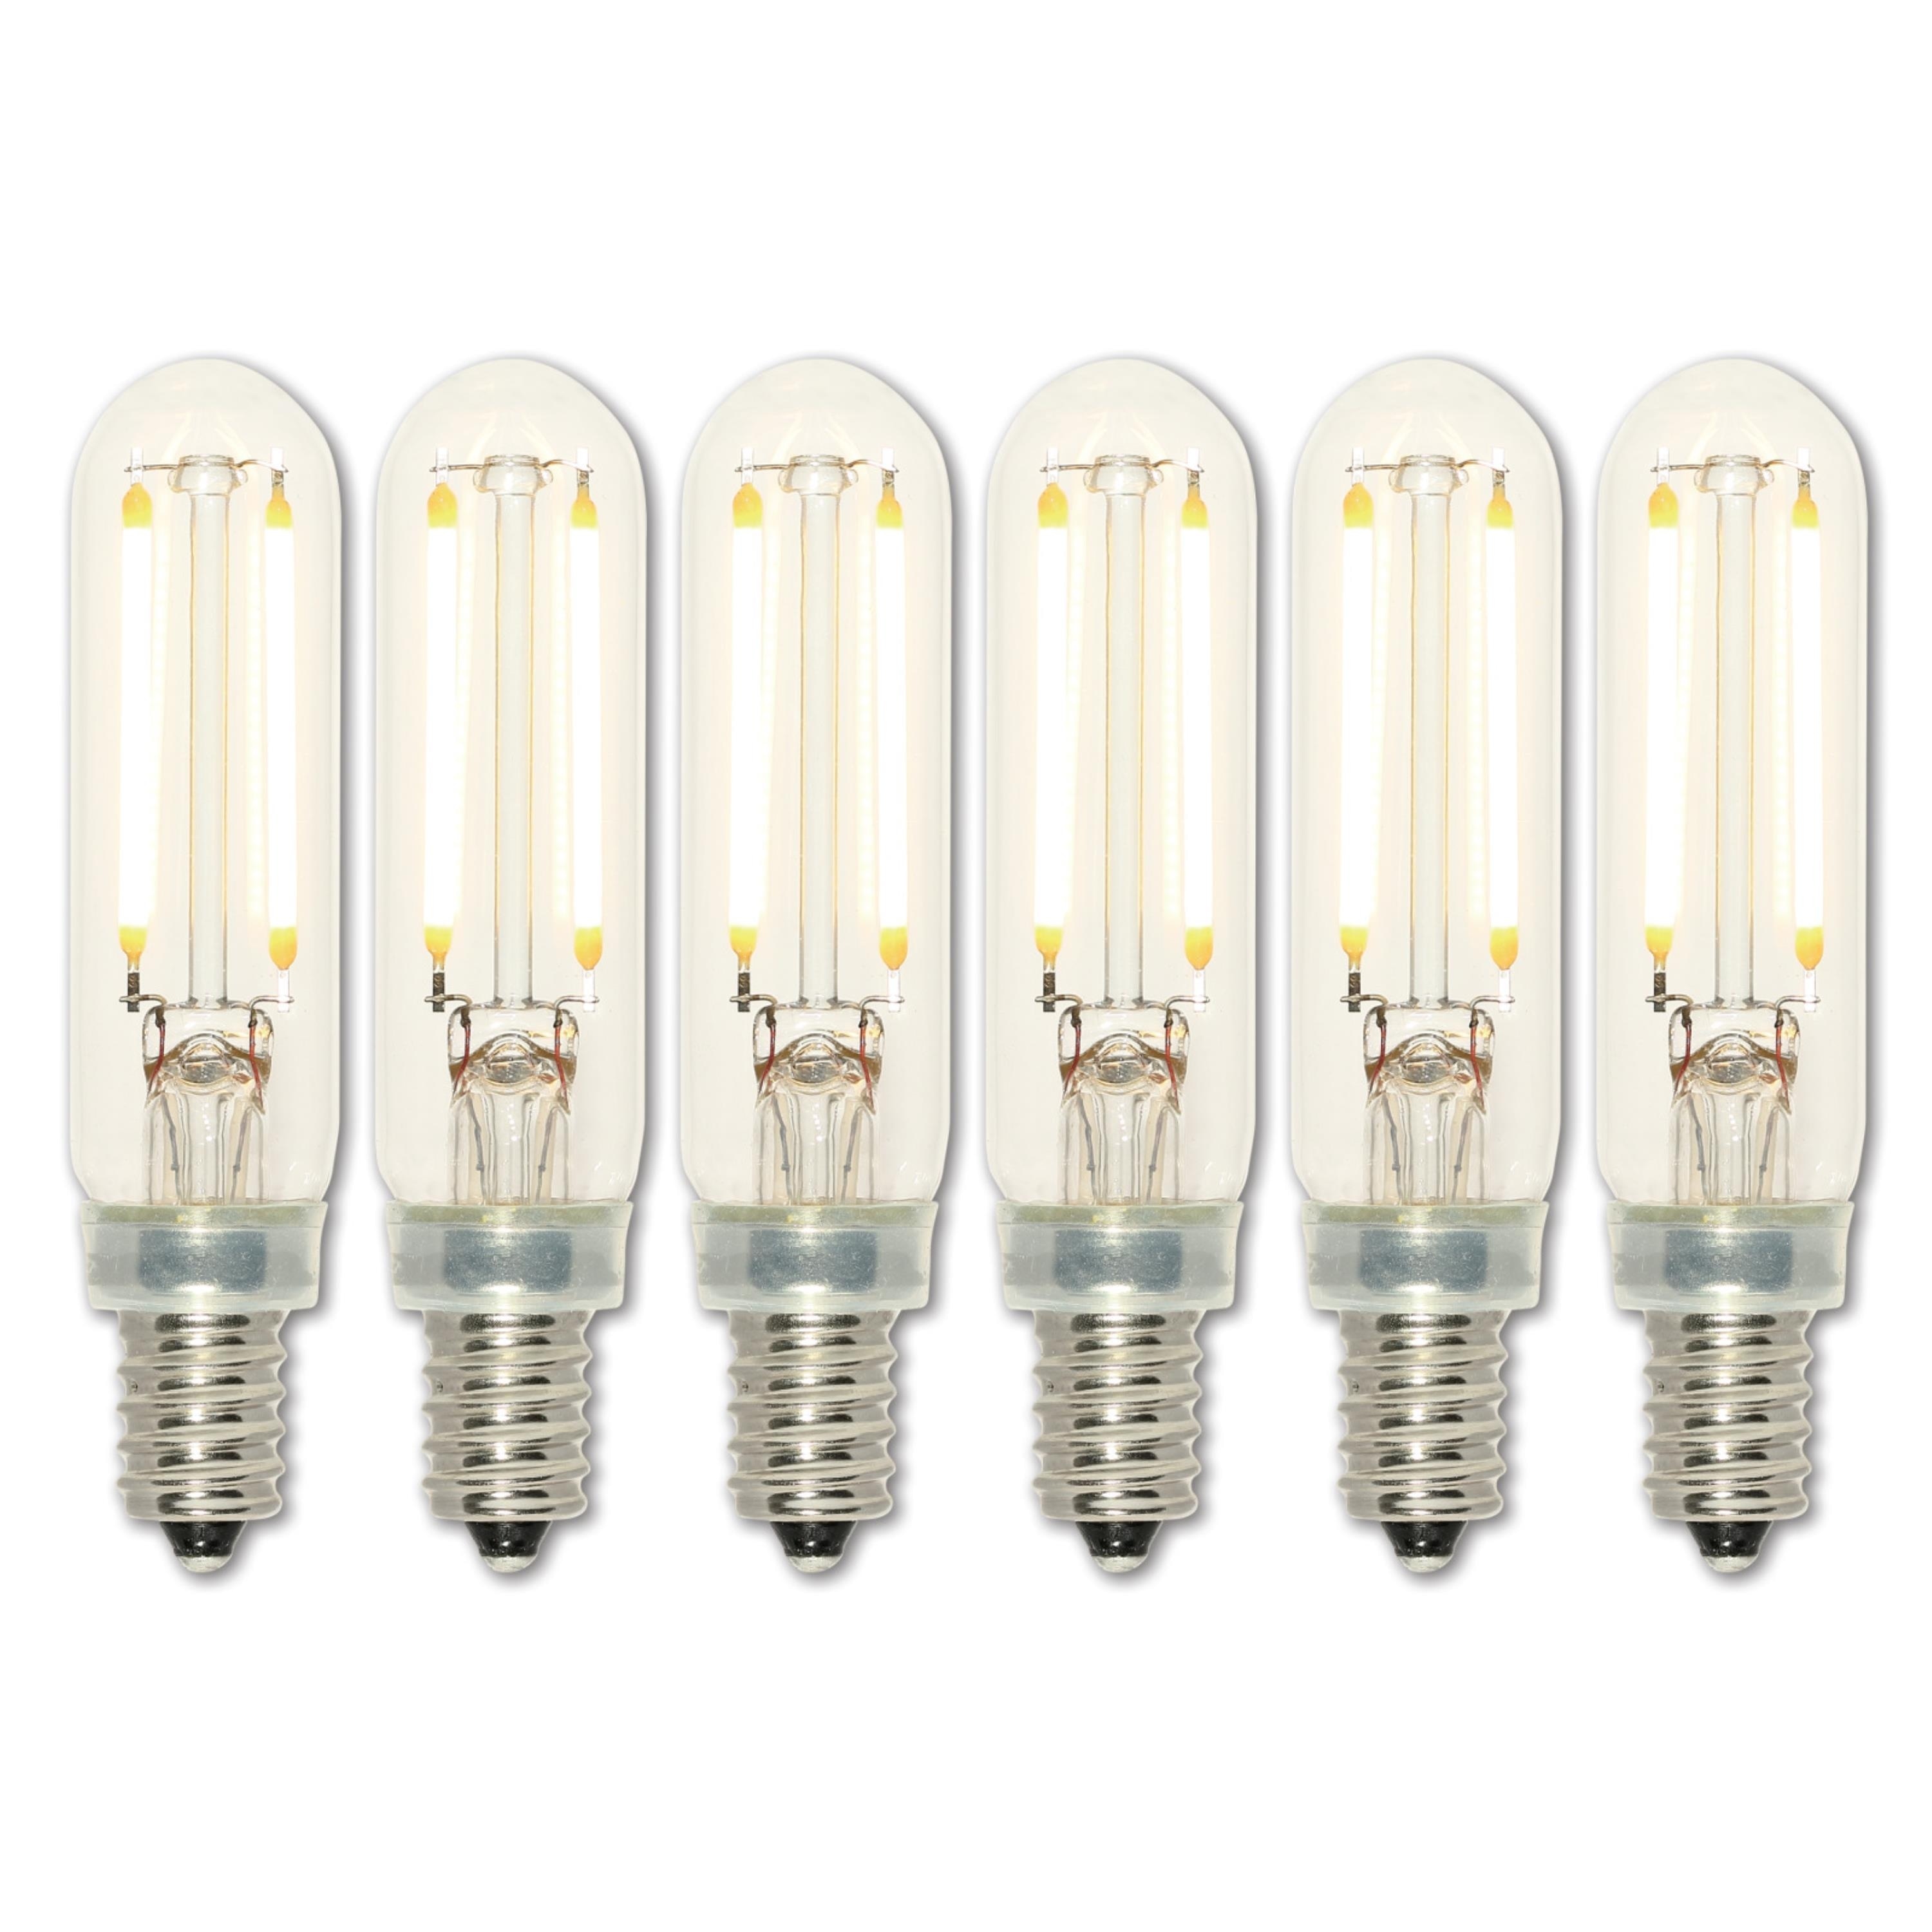 3.5 Watt (60 Watt Equivalent) T10 Dimmable Filament LED Light Bulb